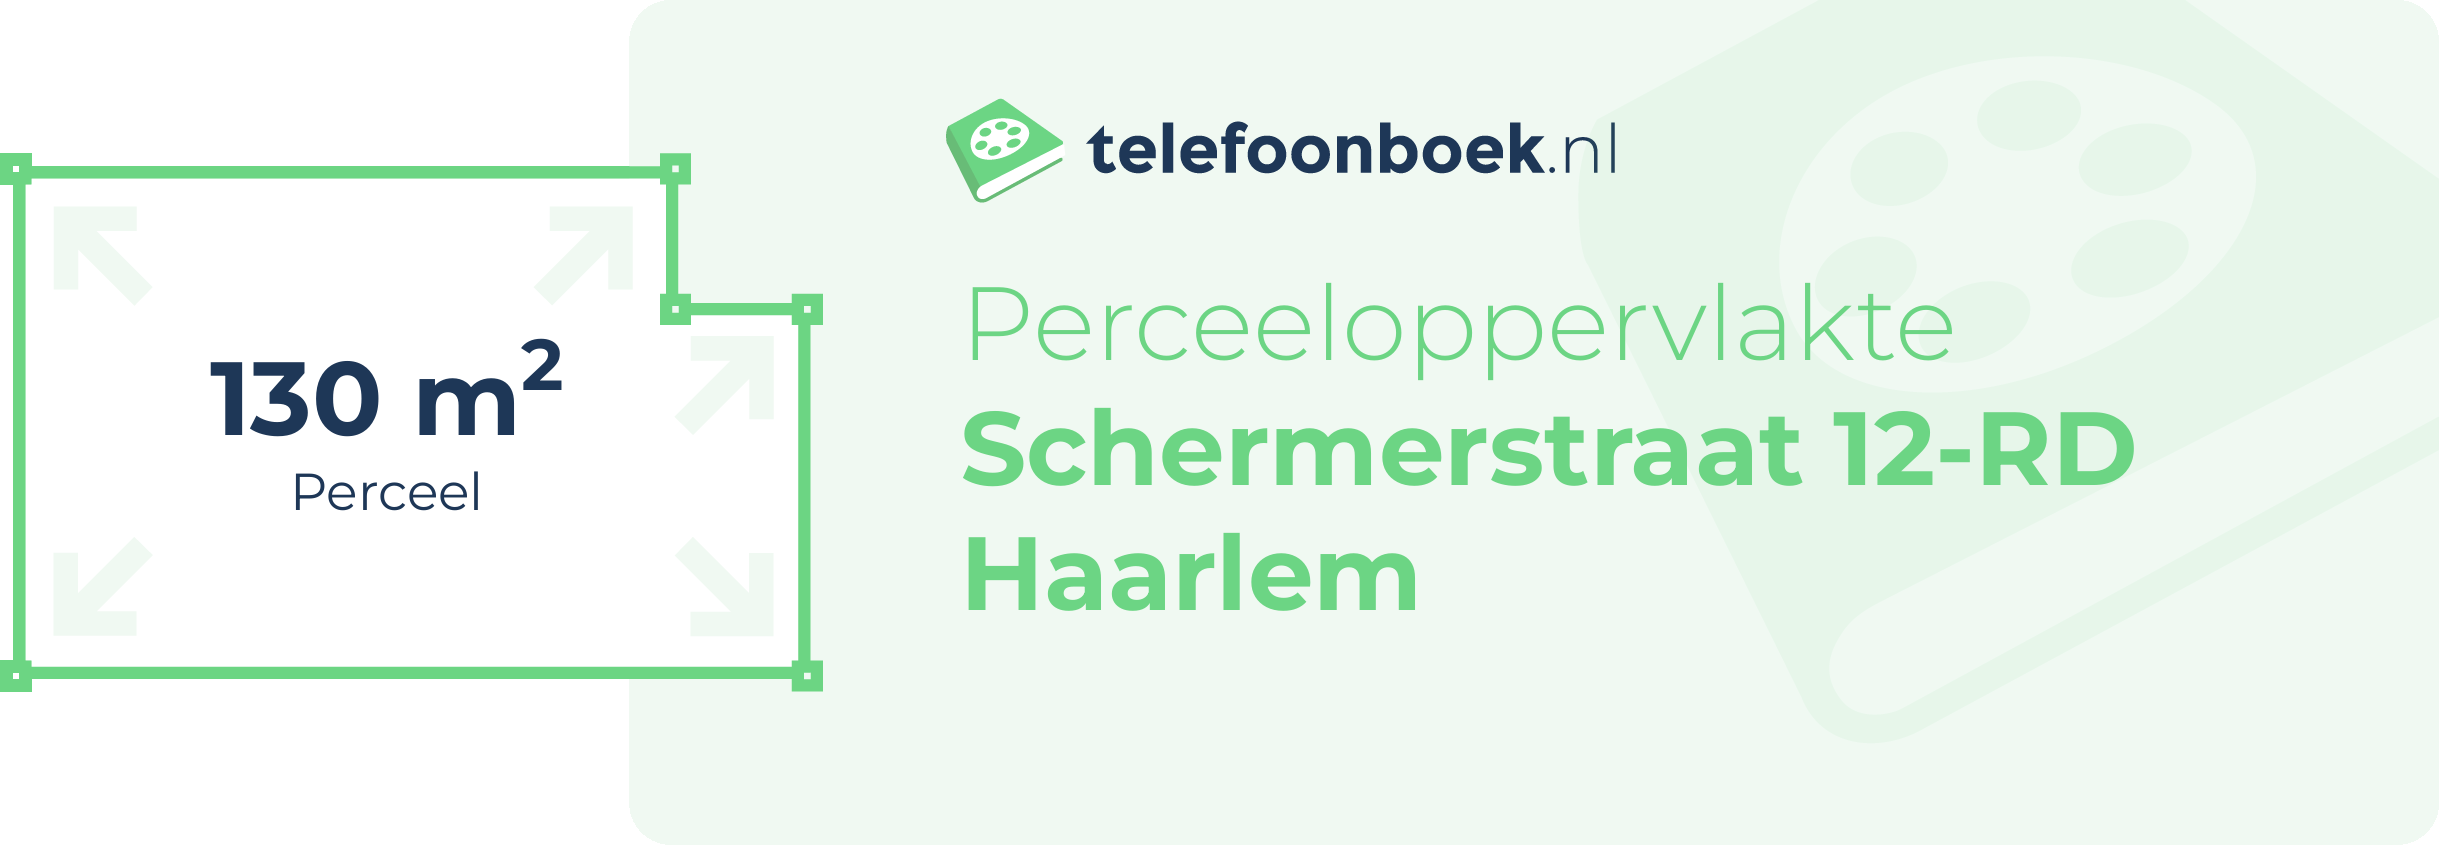 Perceeloppervlakte Schermerstraat 12-RD Haarlem